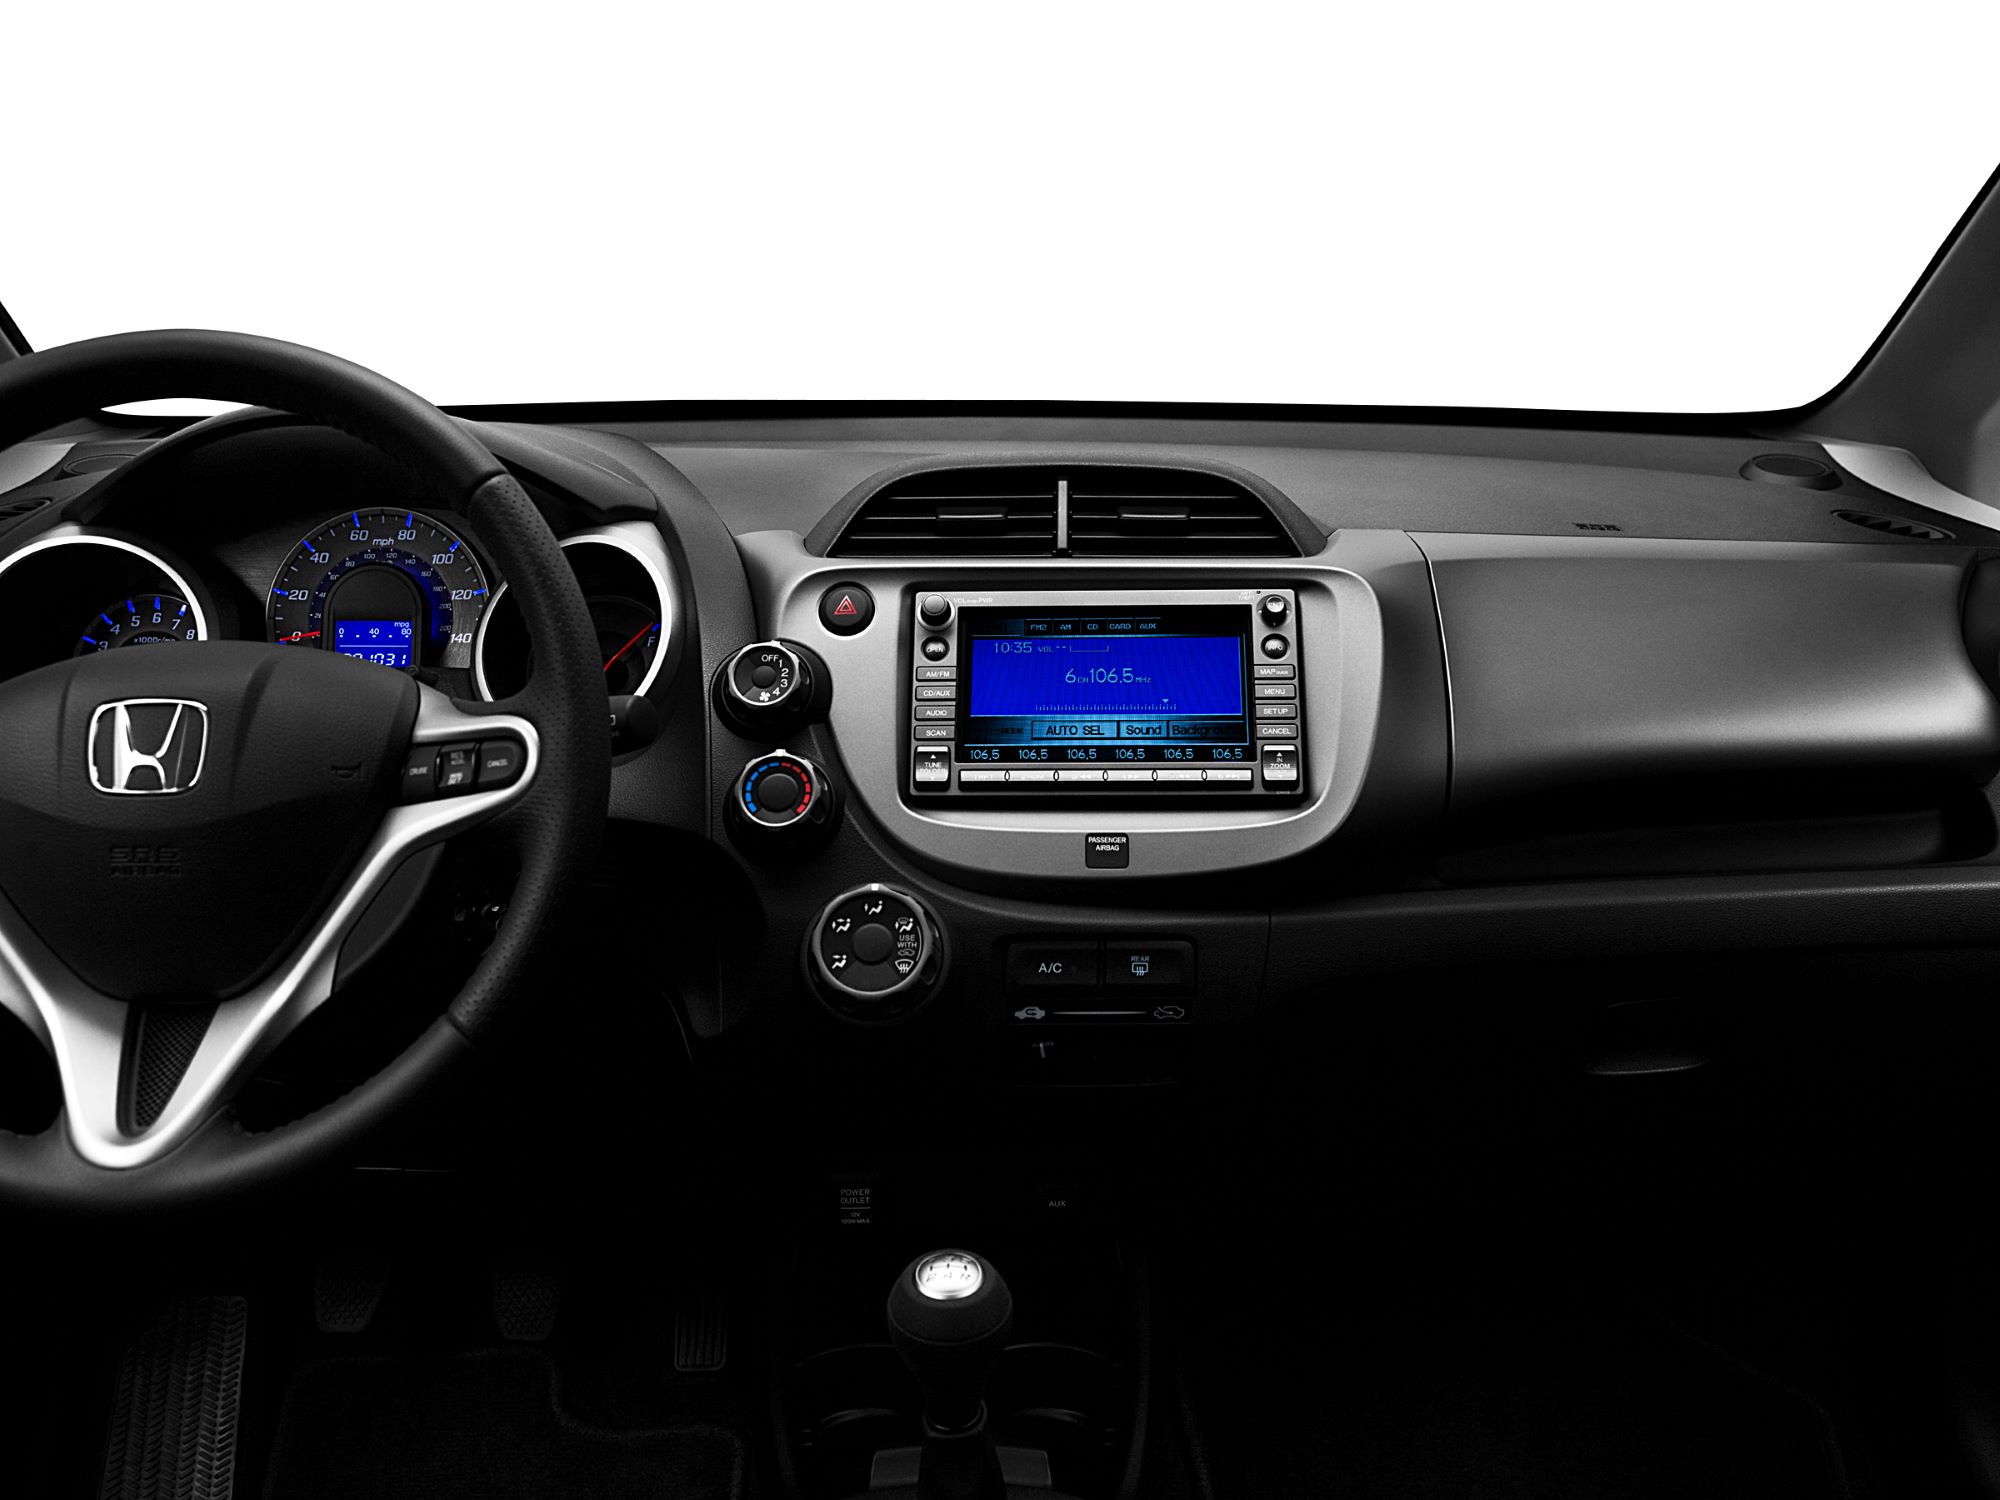 Unlock your Honda's radio/navigation code effortlessly.